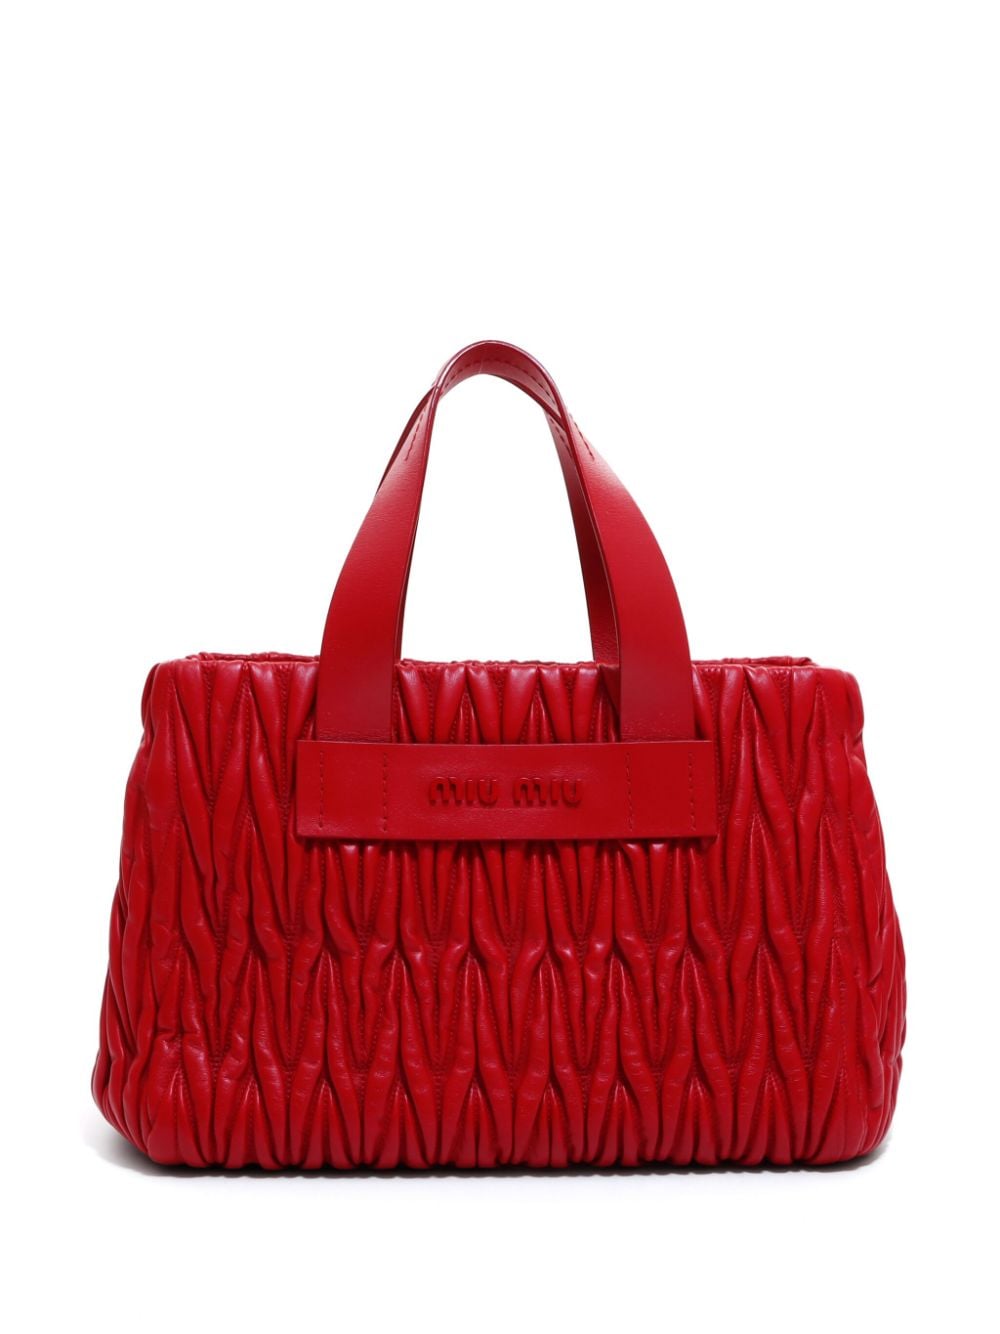 matelassé-effect leather handbag